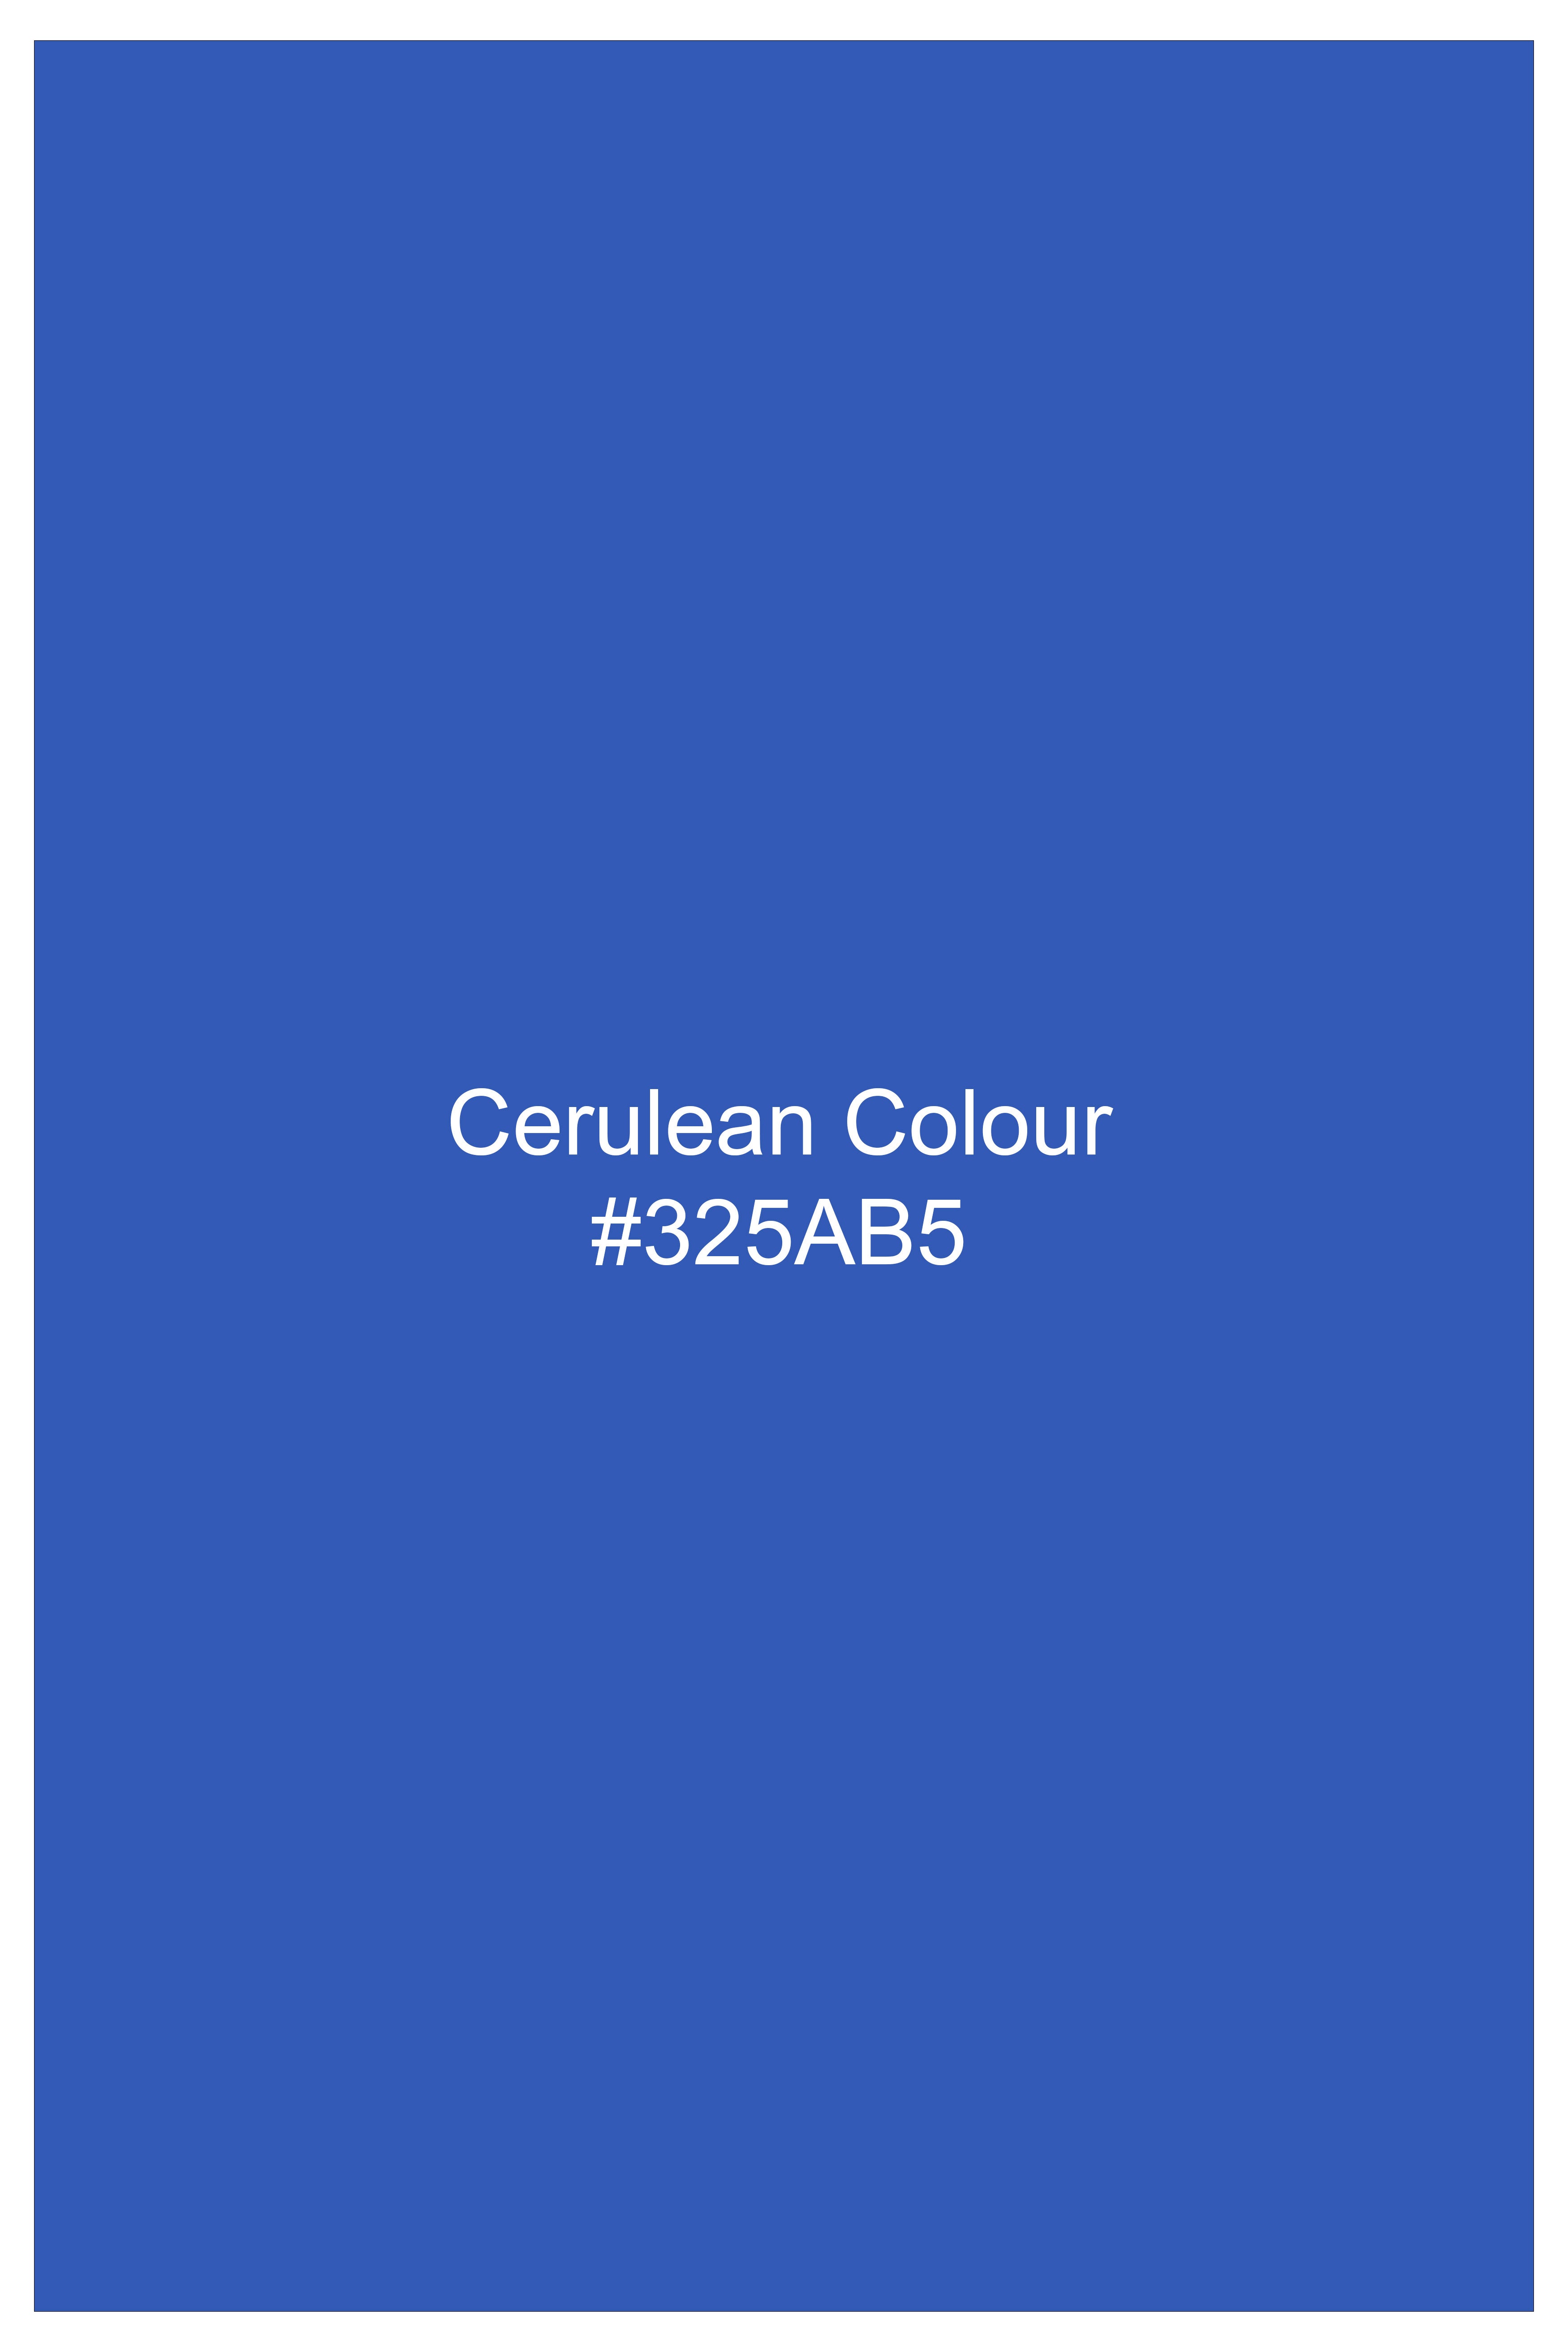 Cerulean Blue Dobby Textured Premium Cotton Lounge Pant